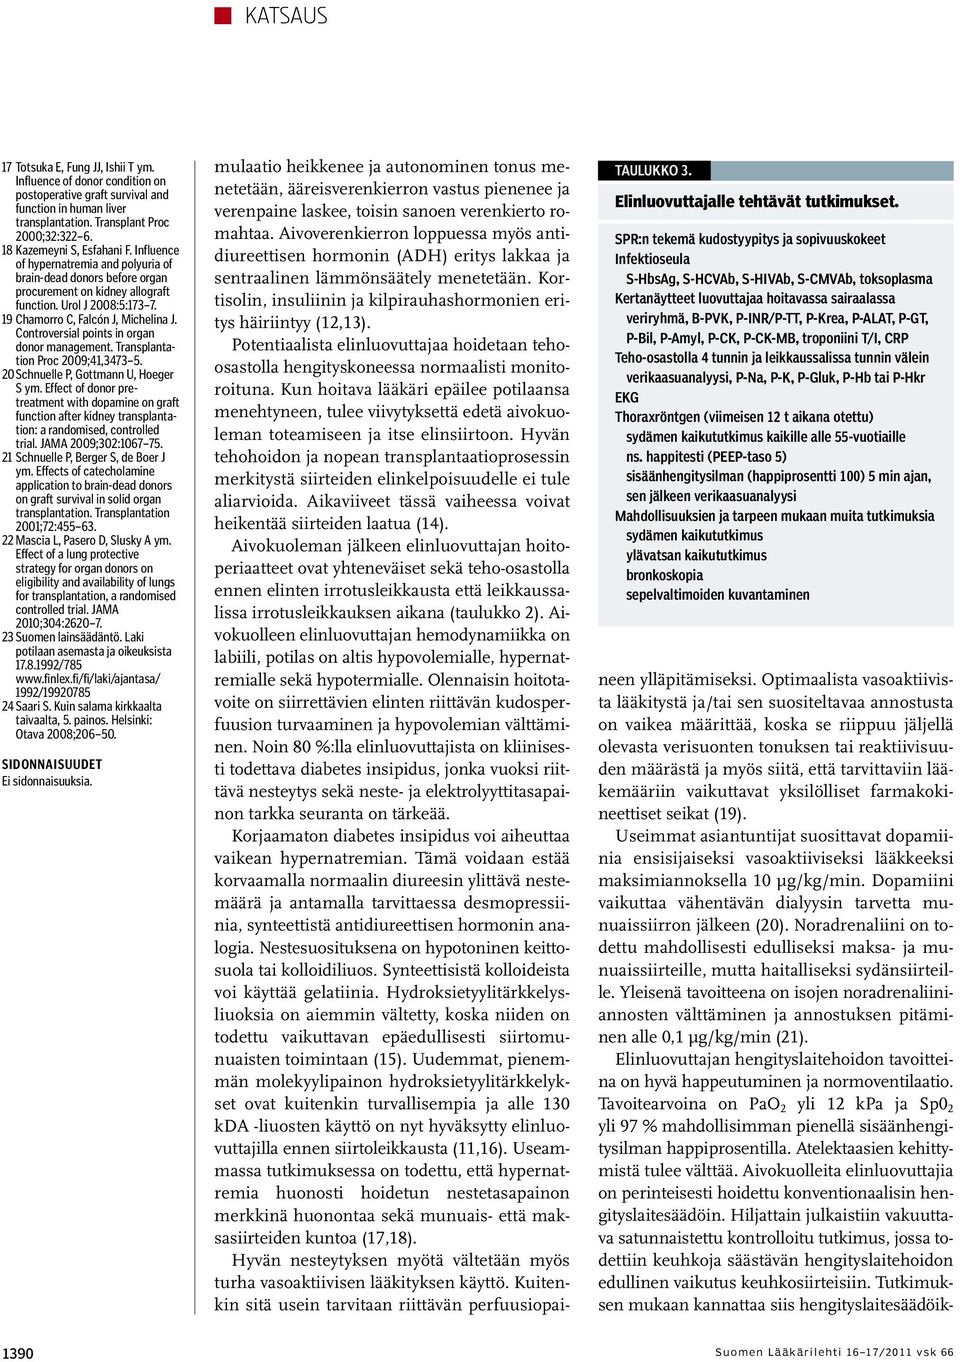 19 Chamorro C, Falcón J, Michelina J. Controversial points in organ donor management. Transplantation Proc 2009;41,3473 5. 20Schnuelle P, Gottmann U, Hoeger S ym.